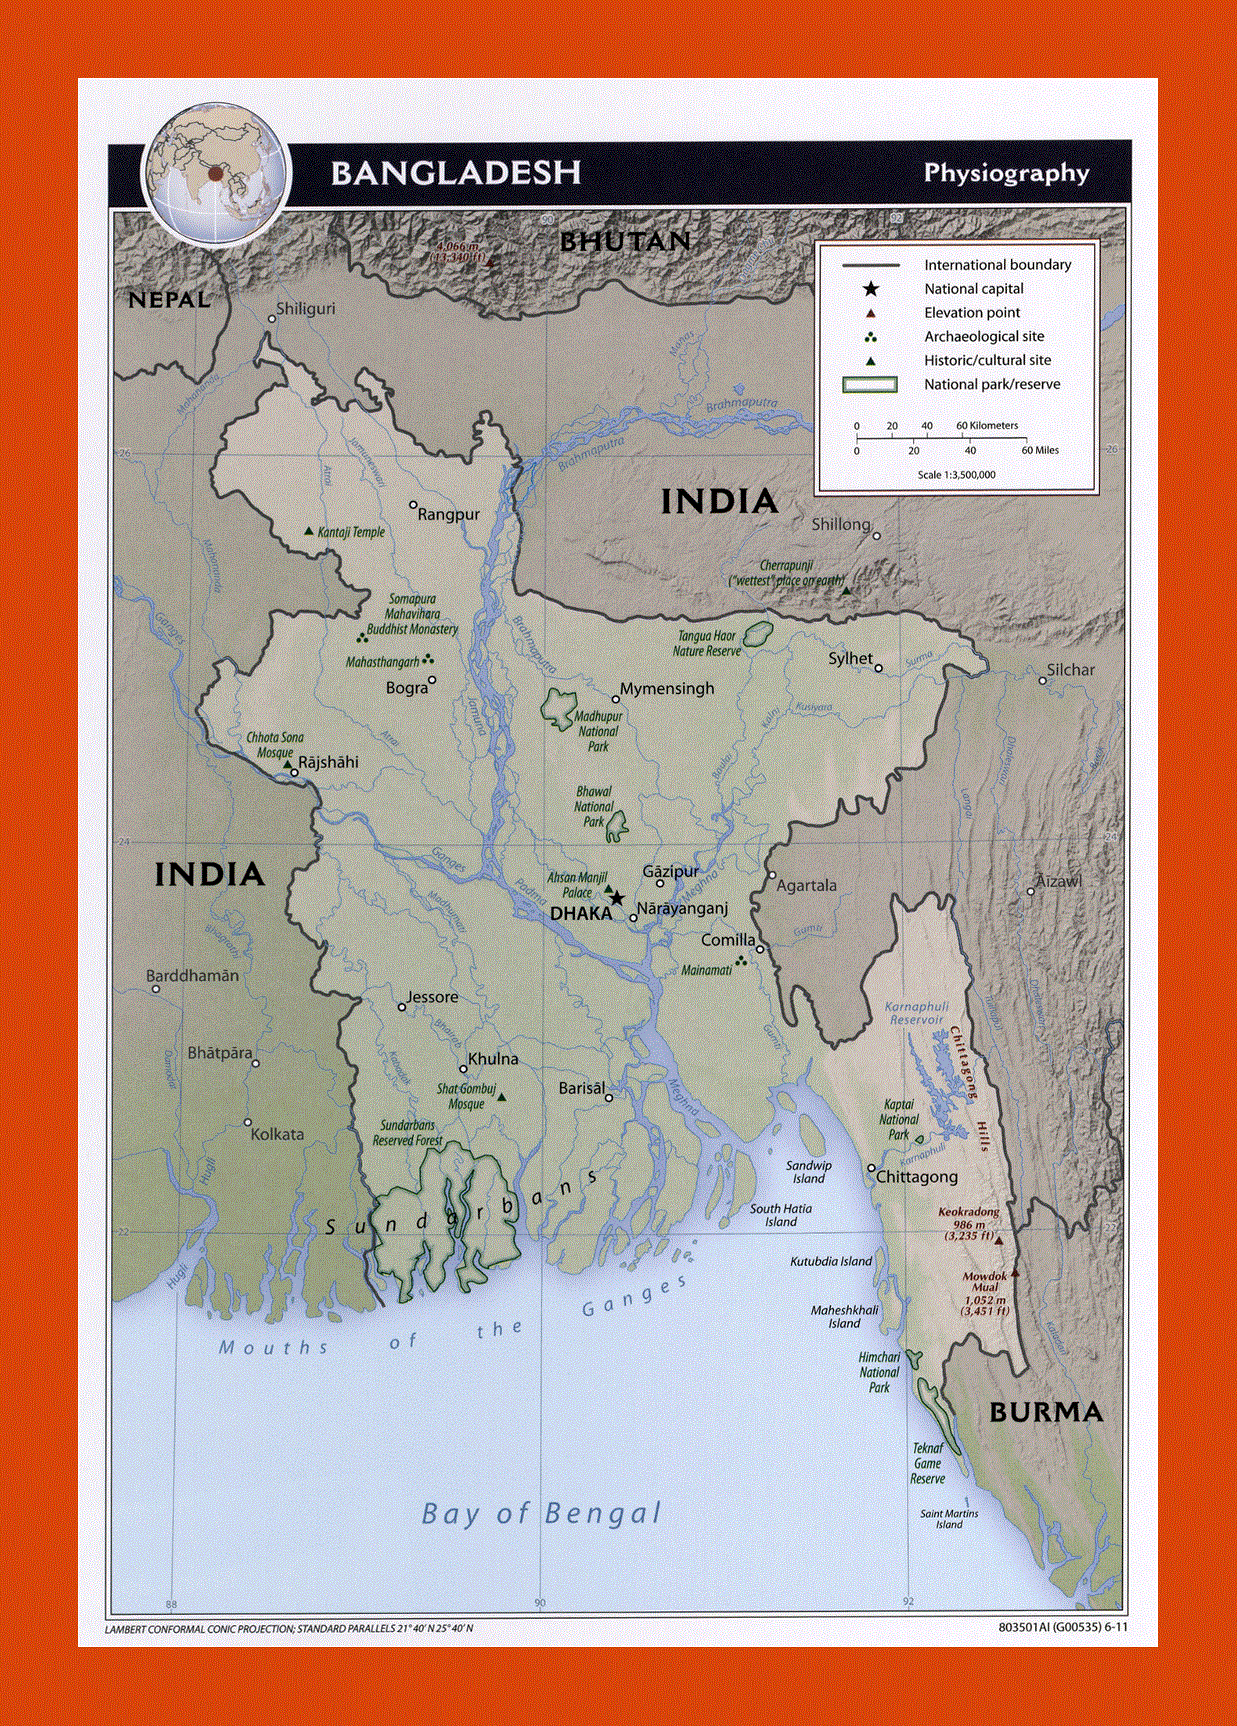 Physiography map of Bangladesh - 2011